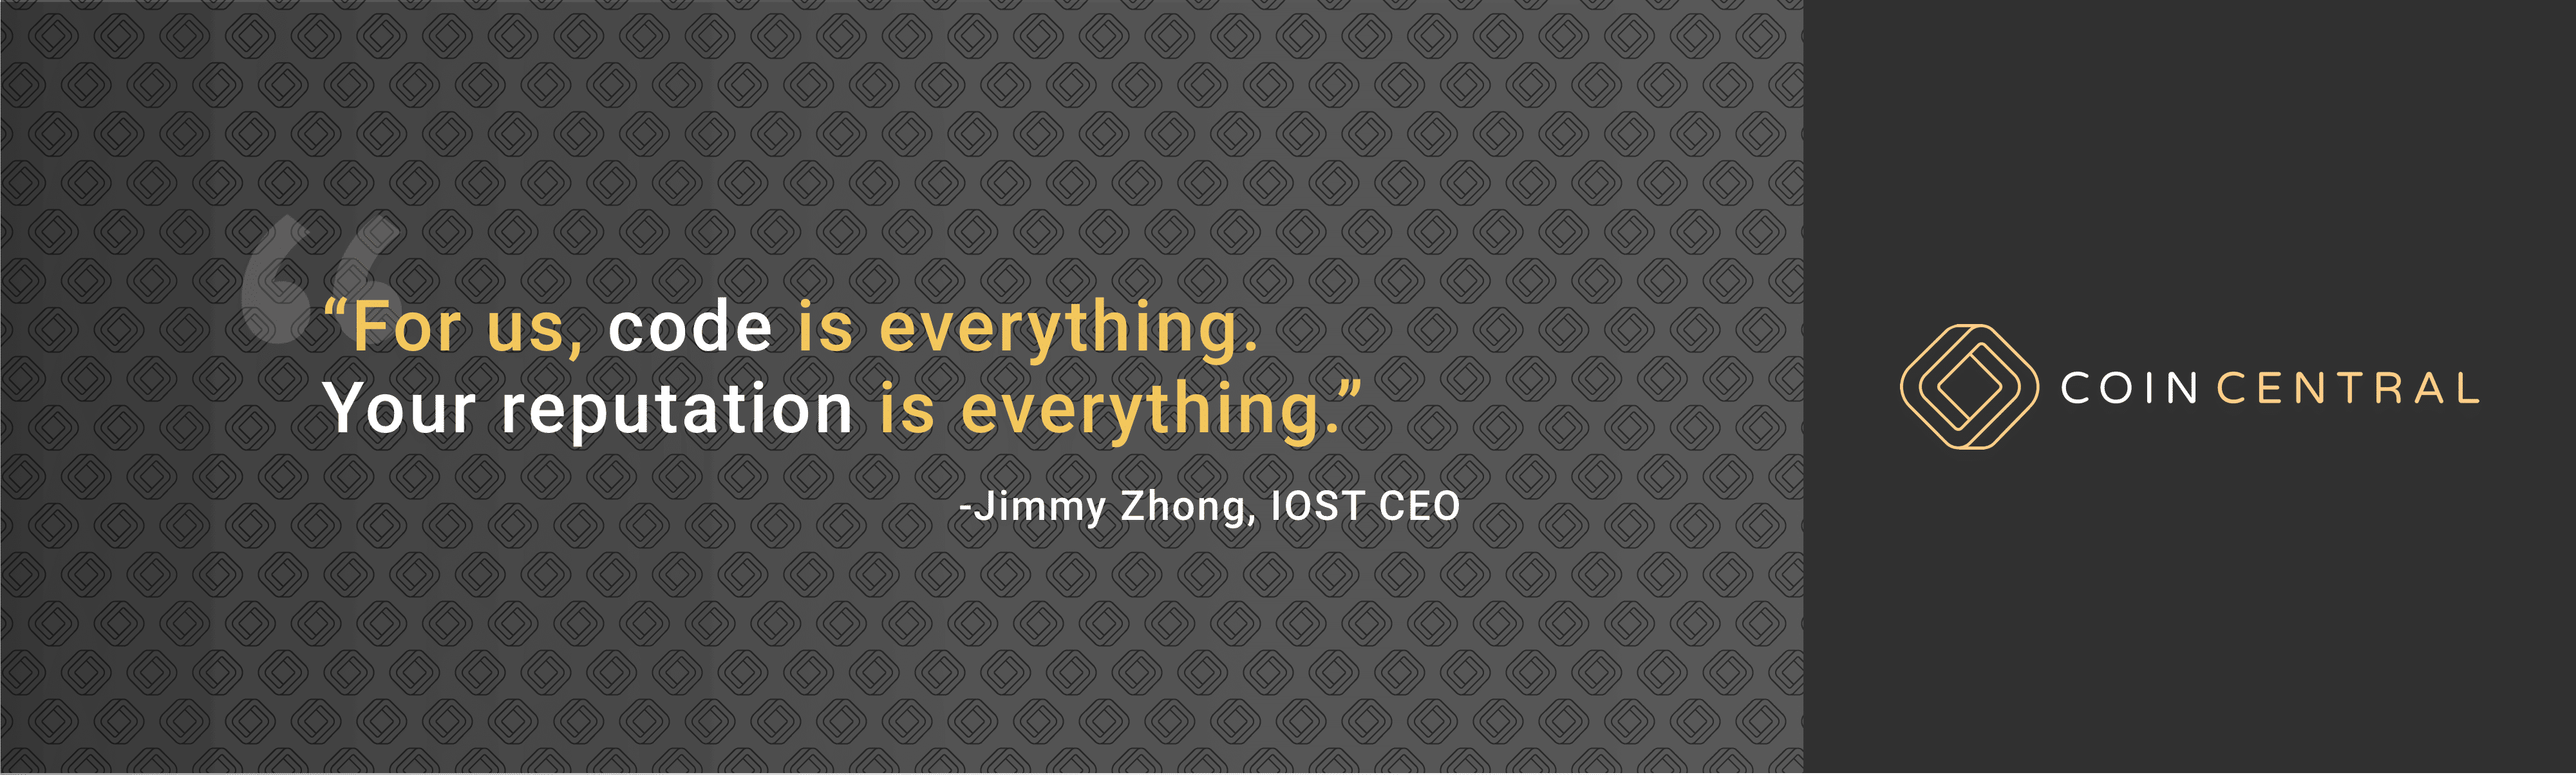 Jimmy Zhong kodo citata